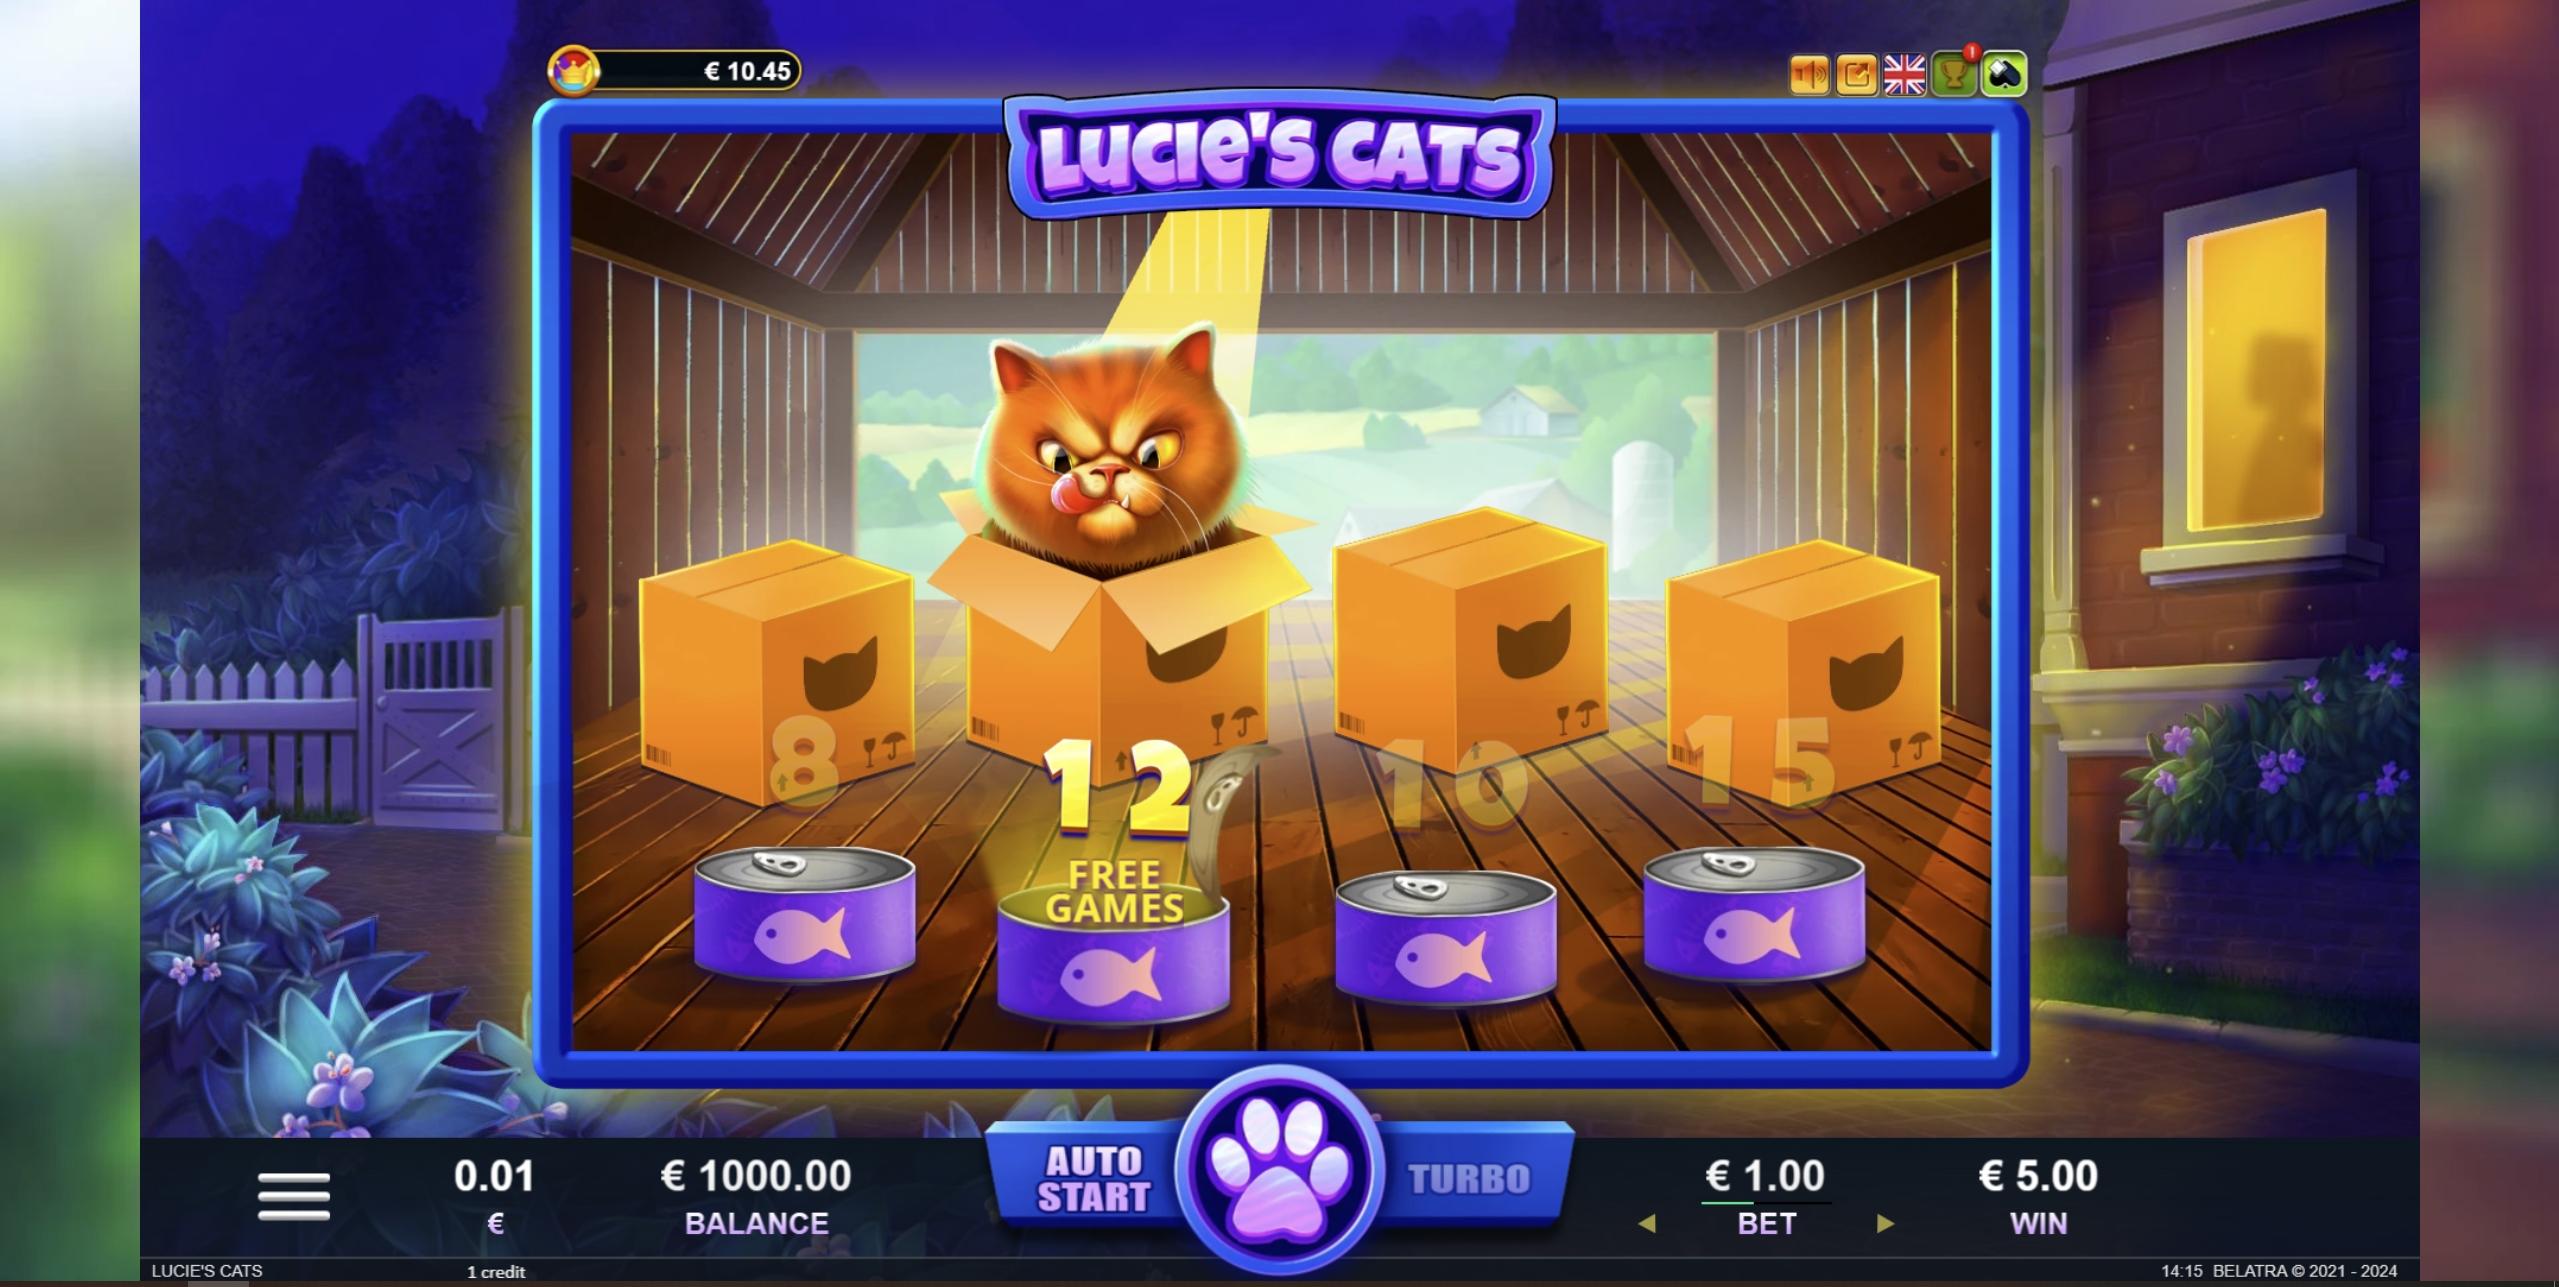 Lucie's Cats | Промо-материалы | Игровой автомат онлайн